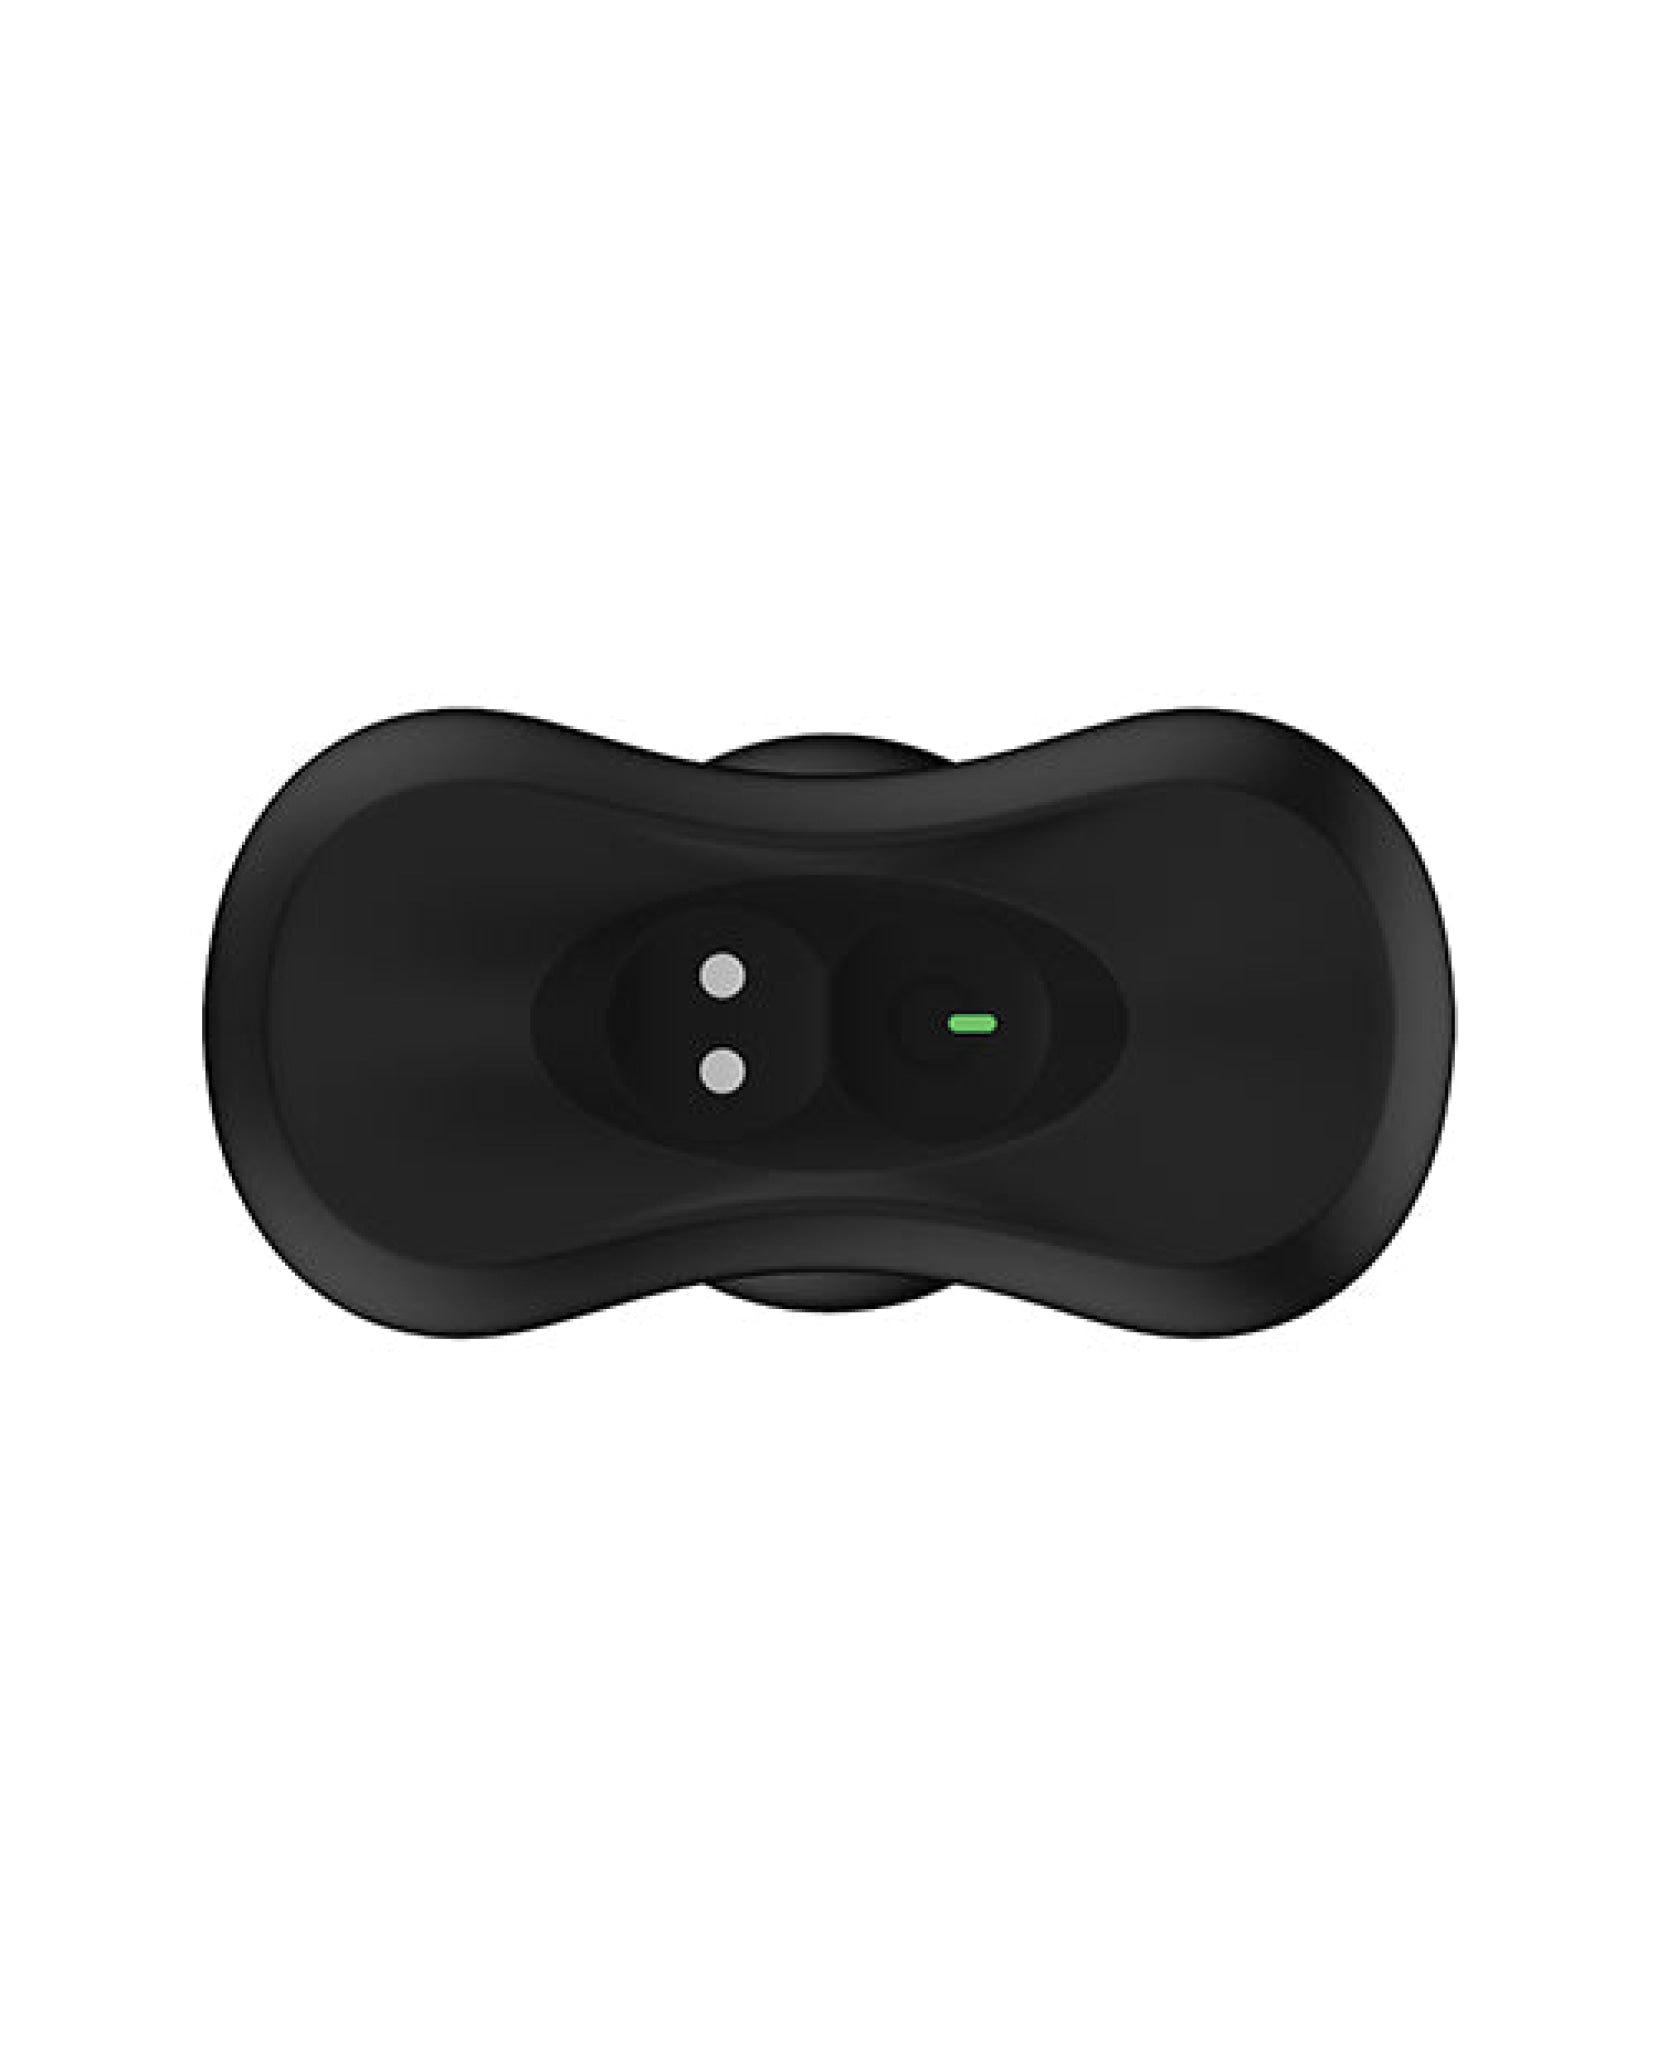 Nexus Bolster Butt Plug  W-inflatable Tip - Black Nexus